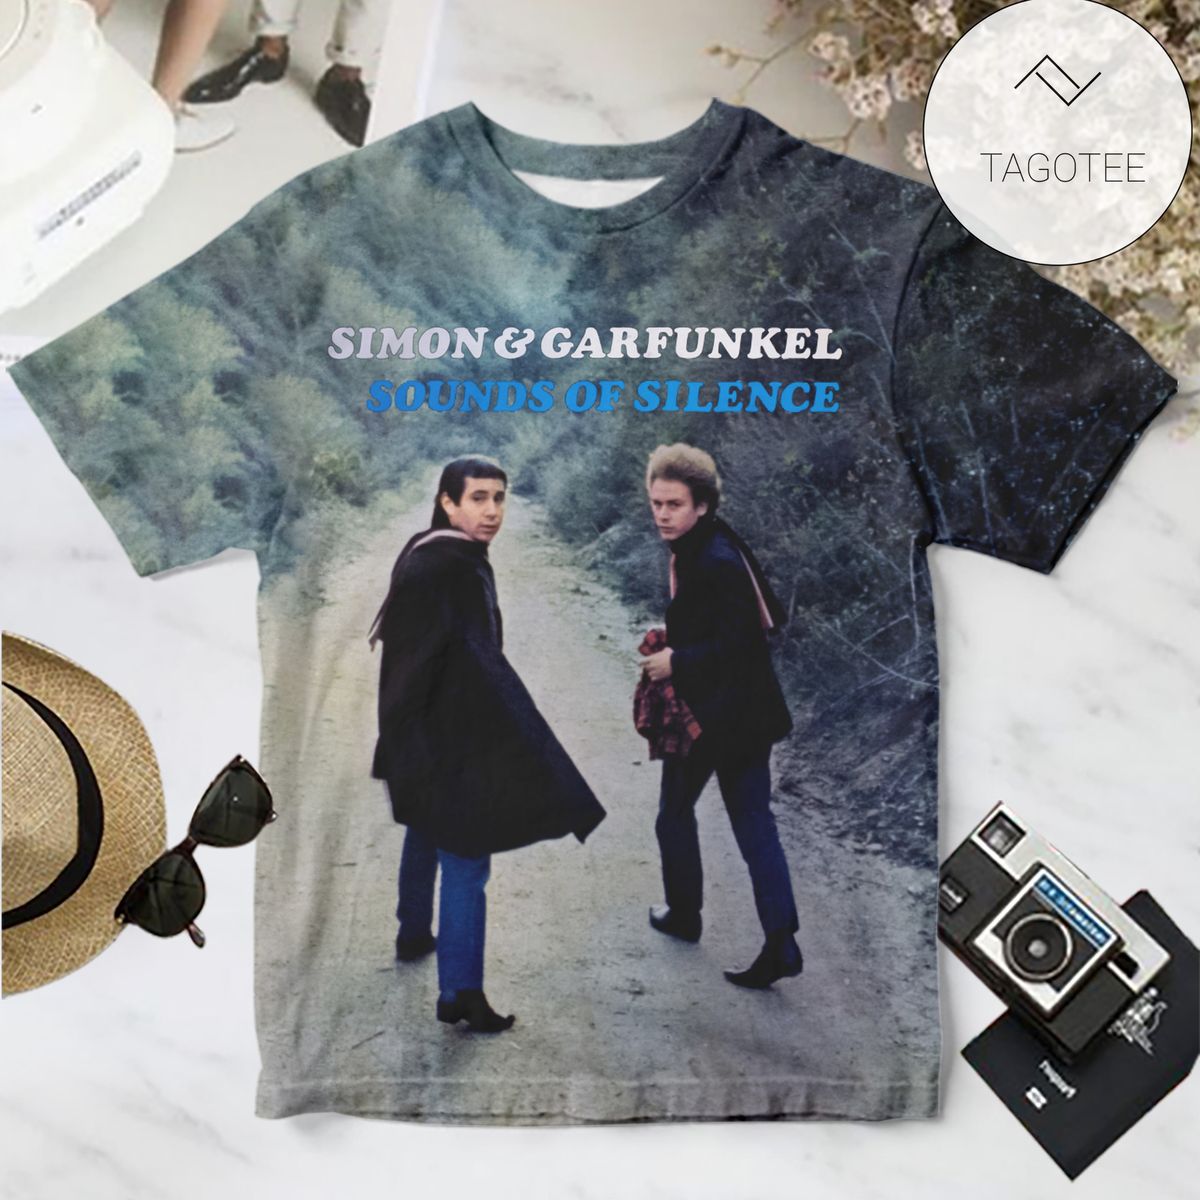 Simon And Garfunkel Sound Of Silence Album Cover Shirt